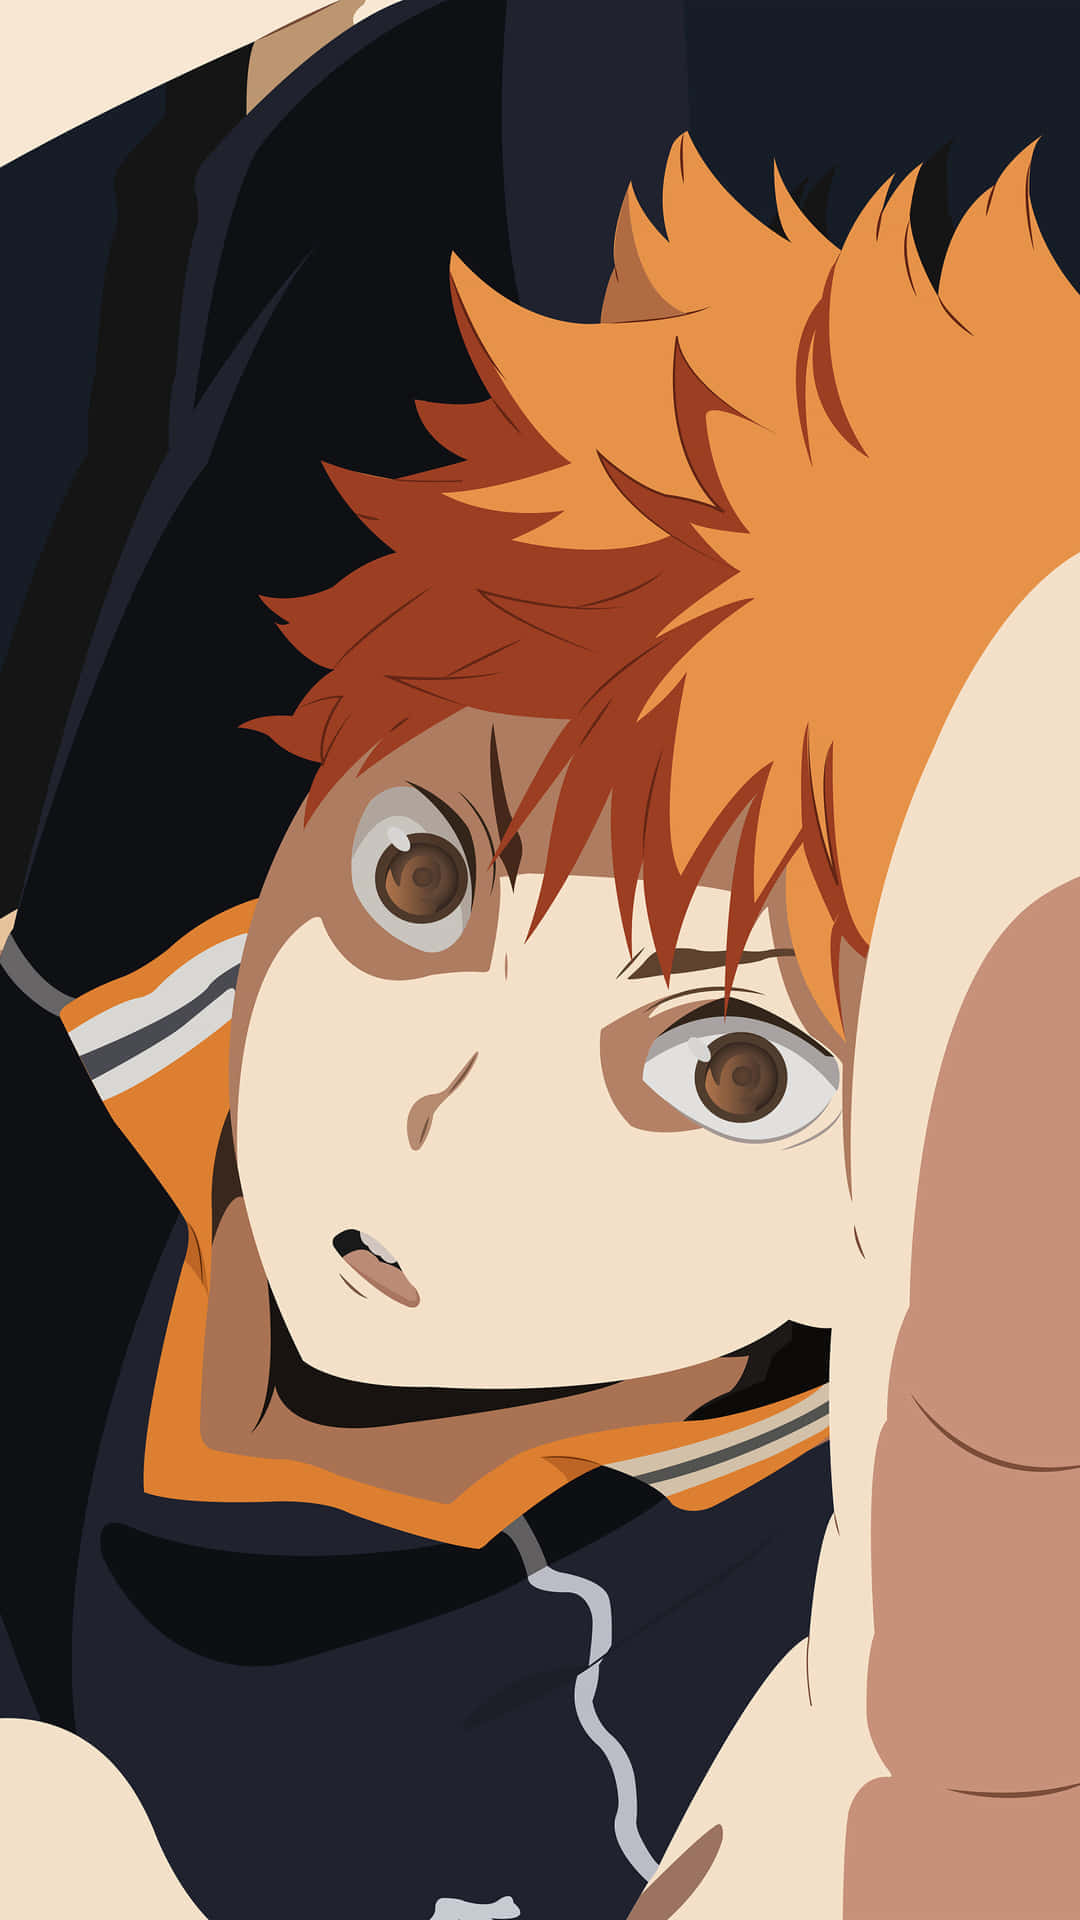 Haikyuu Anime Character Shocked Expression Wallpaper